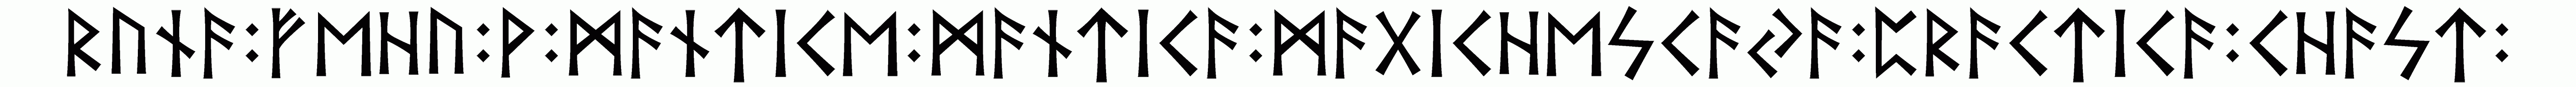 runa+fehu+v+mantike+mantika+magicheskaya+praktika+chast+3 - Напиши имя  РУНА+ФЕХУ+В+МАНТИКЕ+МАНТИКА+МАГИЧЕСКАЯ+ПРАКТИКА+ЧАСТЬ+3 рунами  - ᚱᚢᚾᚨ:ᚠᛖᚺᚢ:ᚹ:ᛗᚨᚾᛏᛁᚲᛖ:ᛗᚨᚾᛏᛁᚲᚨ:ᛗᚨᚷᛁᛏᚺᛖᛋᚲᚨᛃᚨ:ᛈᚱᚨᚲᛏᛁᚲᚨ:ᛏᚺᚨᛋᛏ: - Значение и характер имени  РУНА+ФЕХУ+В+МАНТИКЕ+МАНТИКА+МАГИЧЕСКАЯ+ПРАКТИКА+ЧАСТЬ+3 - 